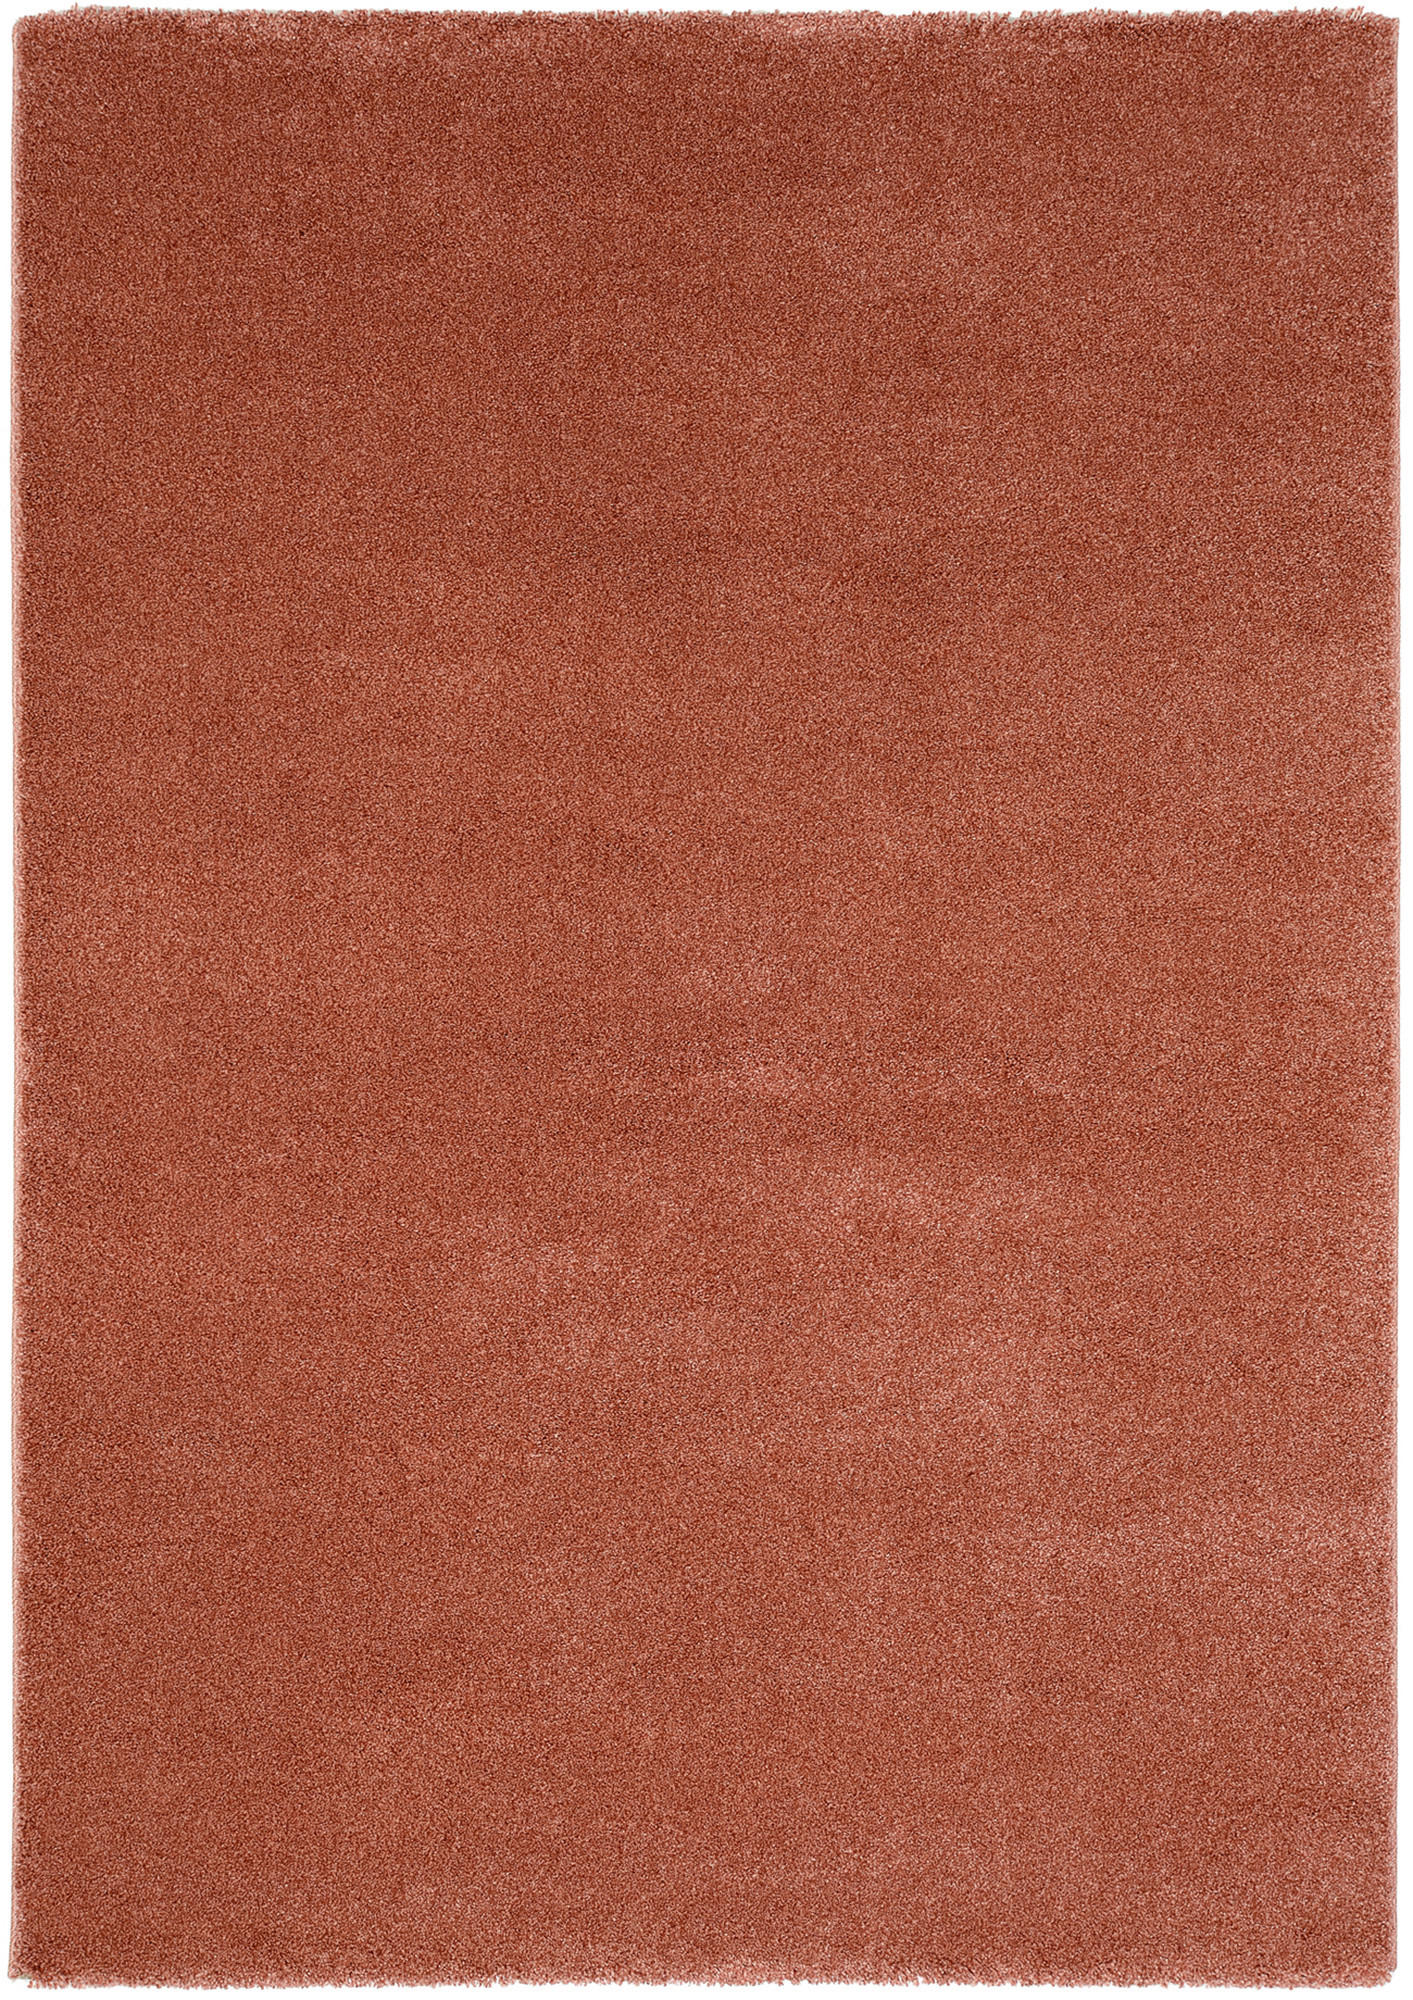 WEBTEPPICH 65/130 cm  - Rot, Basics, Textil (65/130cm) - Novel